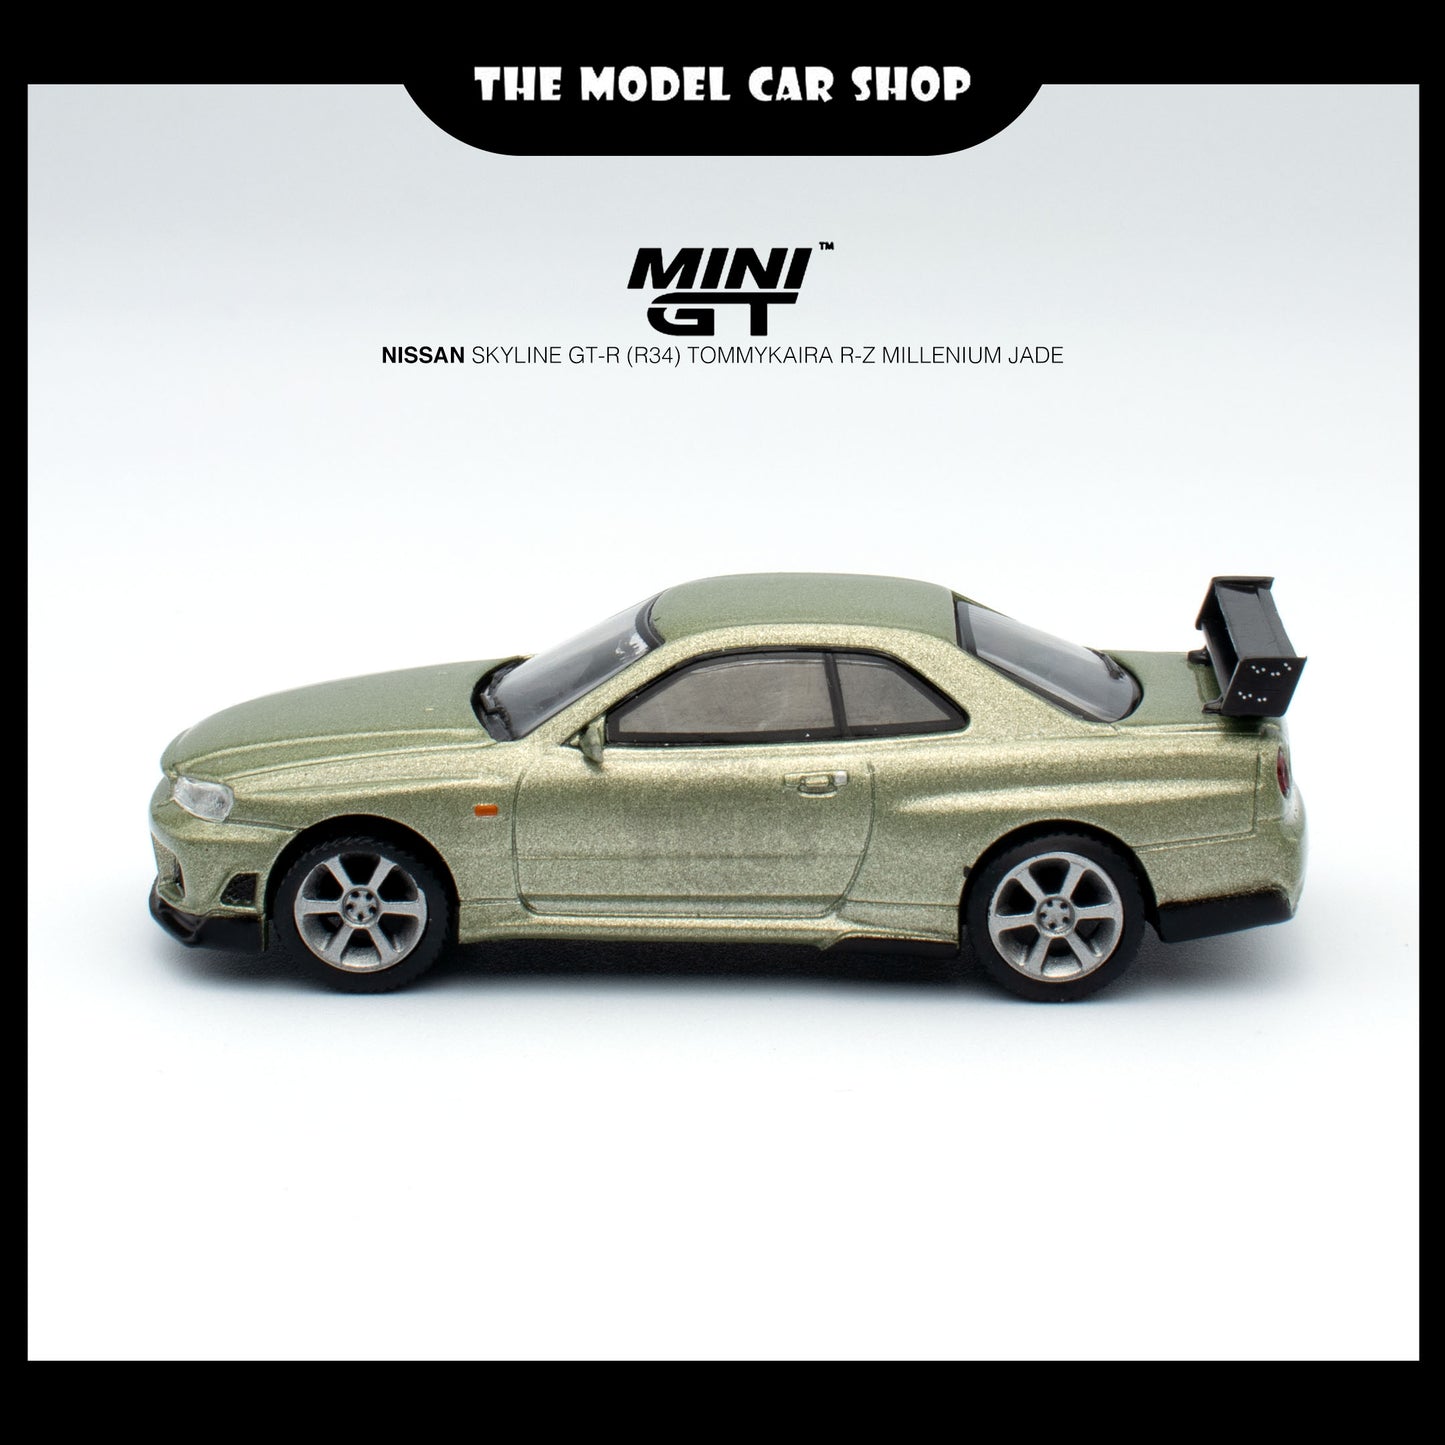 [MINI GT] Nissan Skyline GT-R (R34) Tommykaira R-z - Millenium Jade